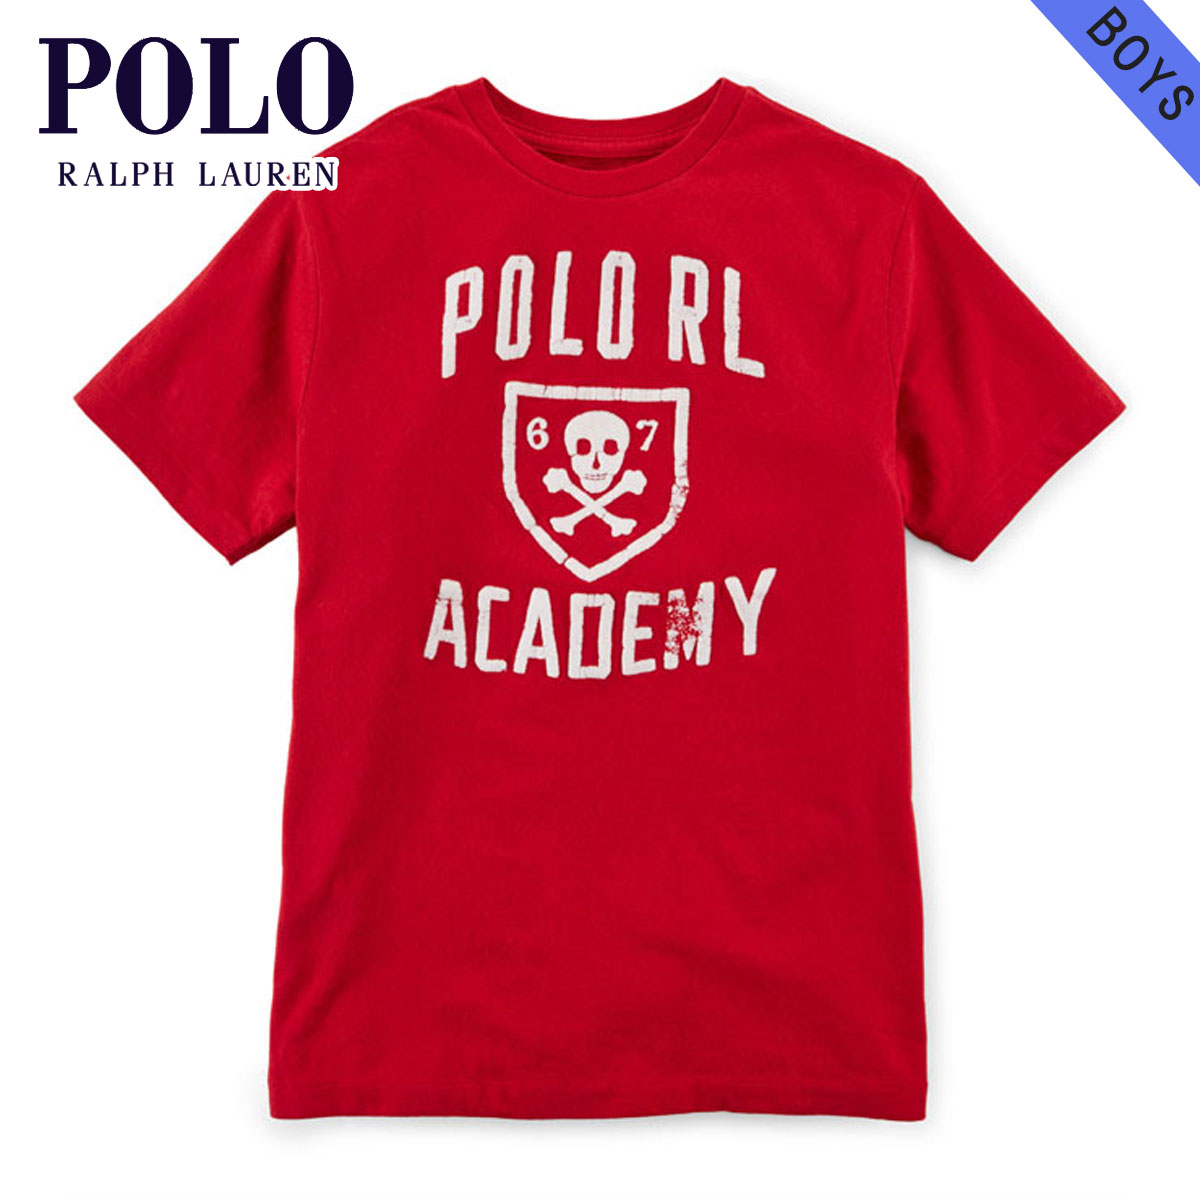 polo ralph lauren graphic t shirts